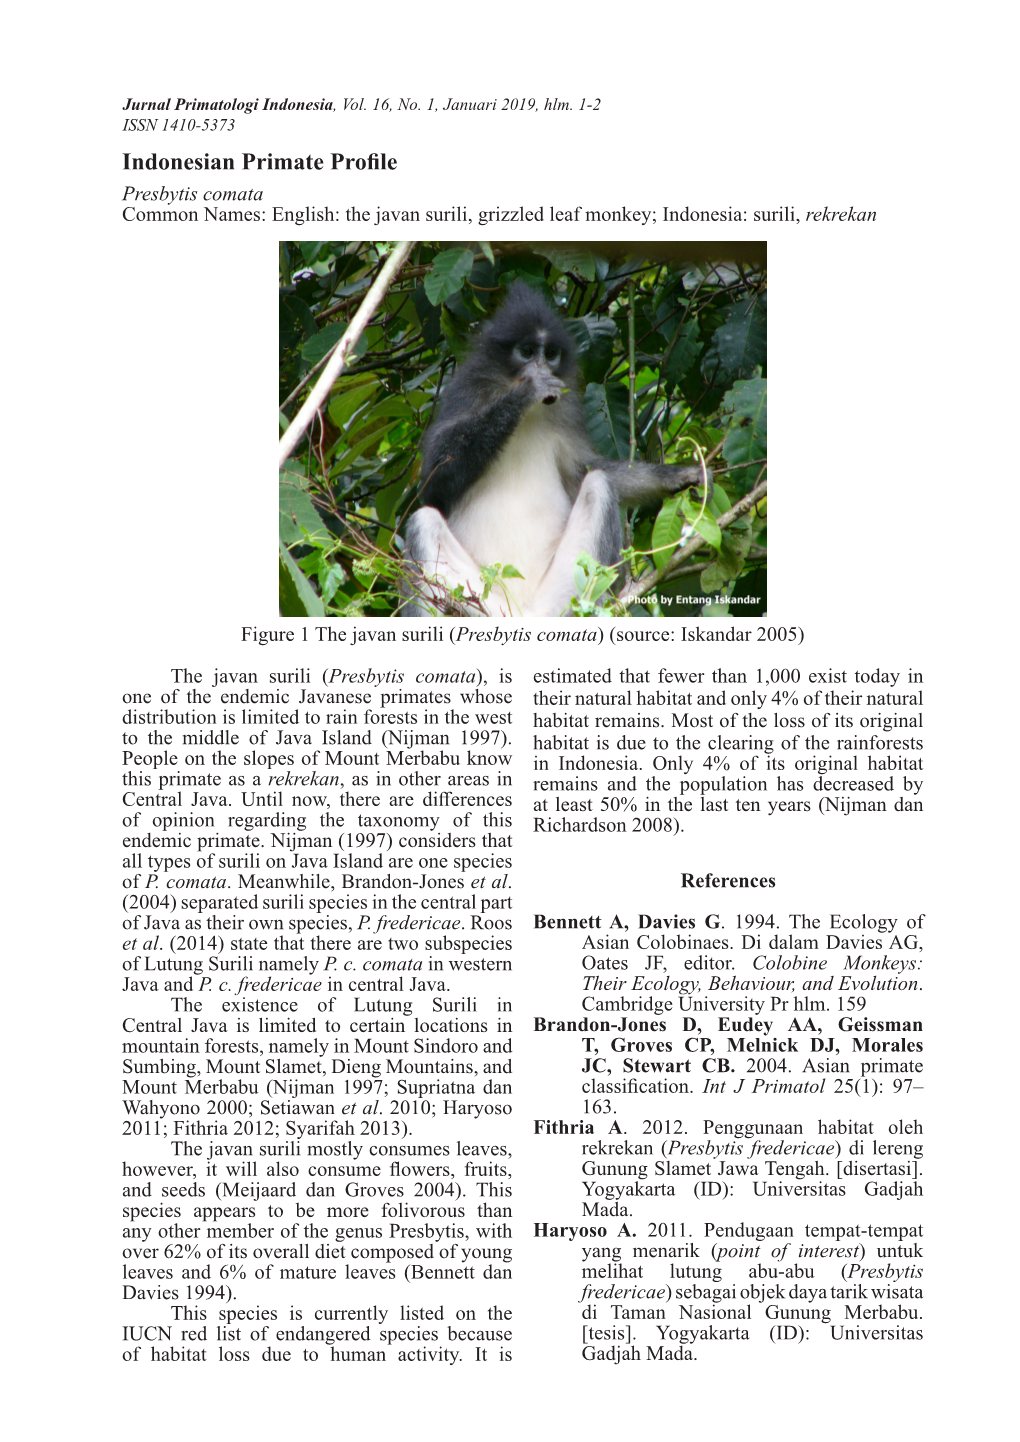 Indonesian Primate Profile Presbytis Comata Common Names: English: the Javan Surili, Grizzled Leaf Monkey; Indonesia: Surili, Rekrekan